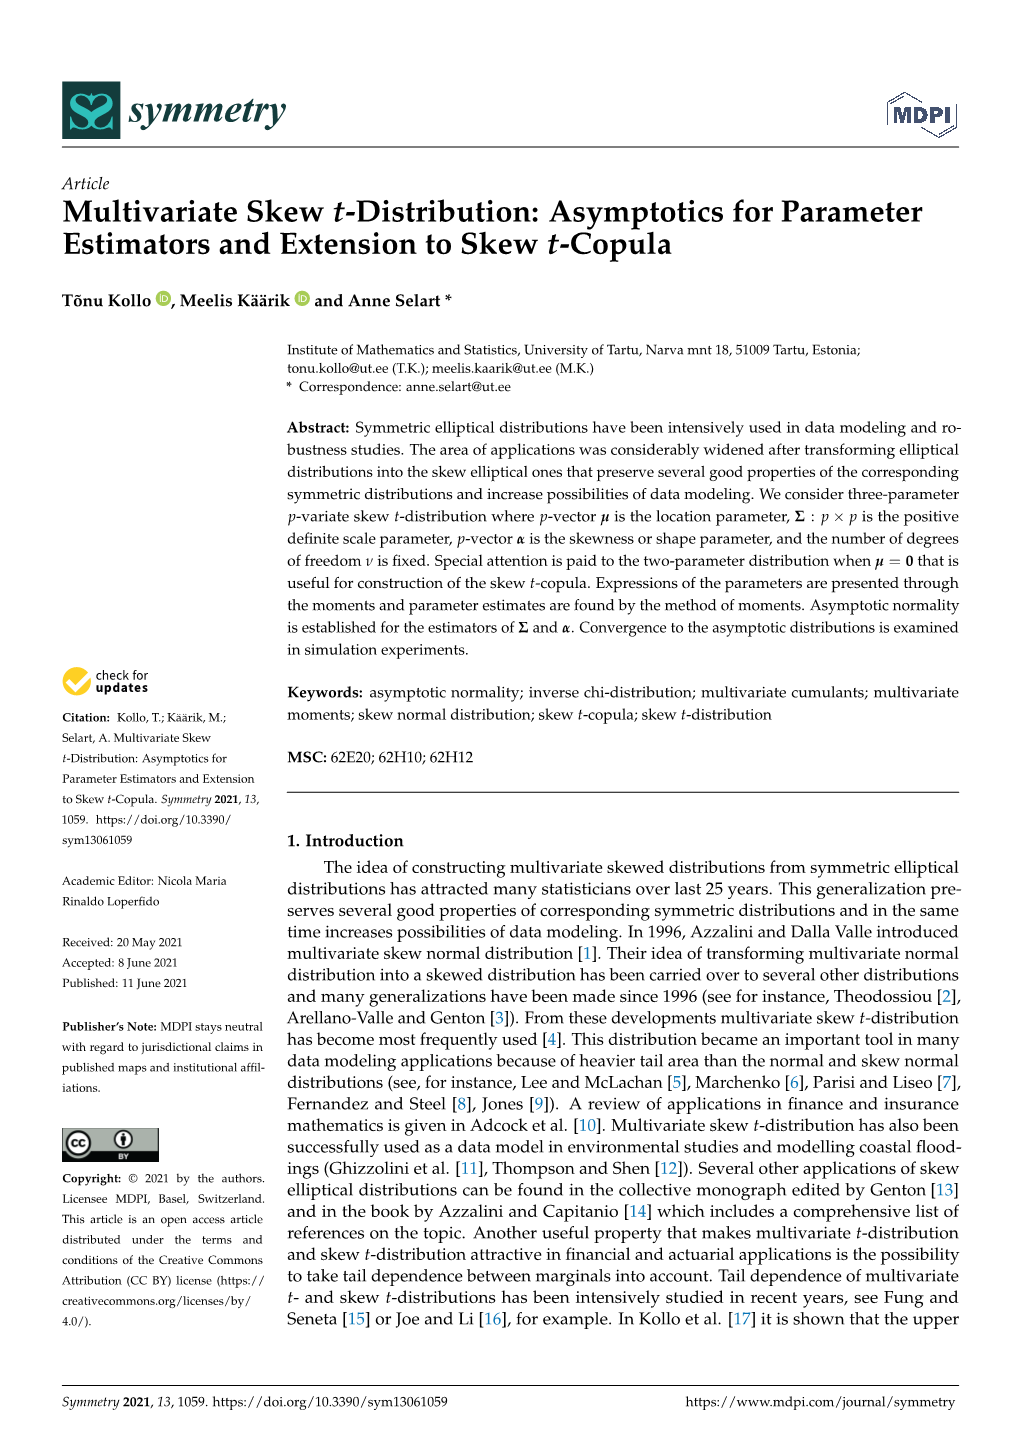 Multivariate Skew T-Distribution: Asymptotics for Parameter Estimators and Extension to Skew T-Copula